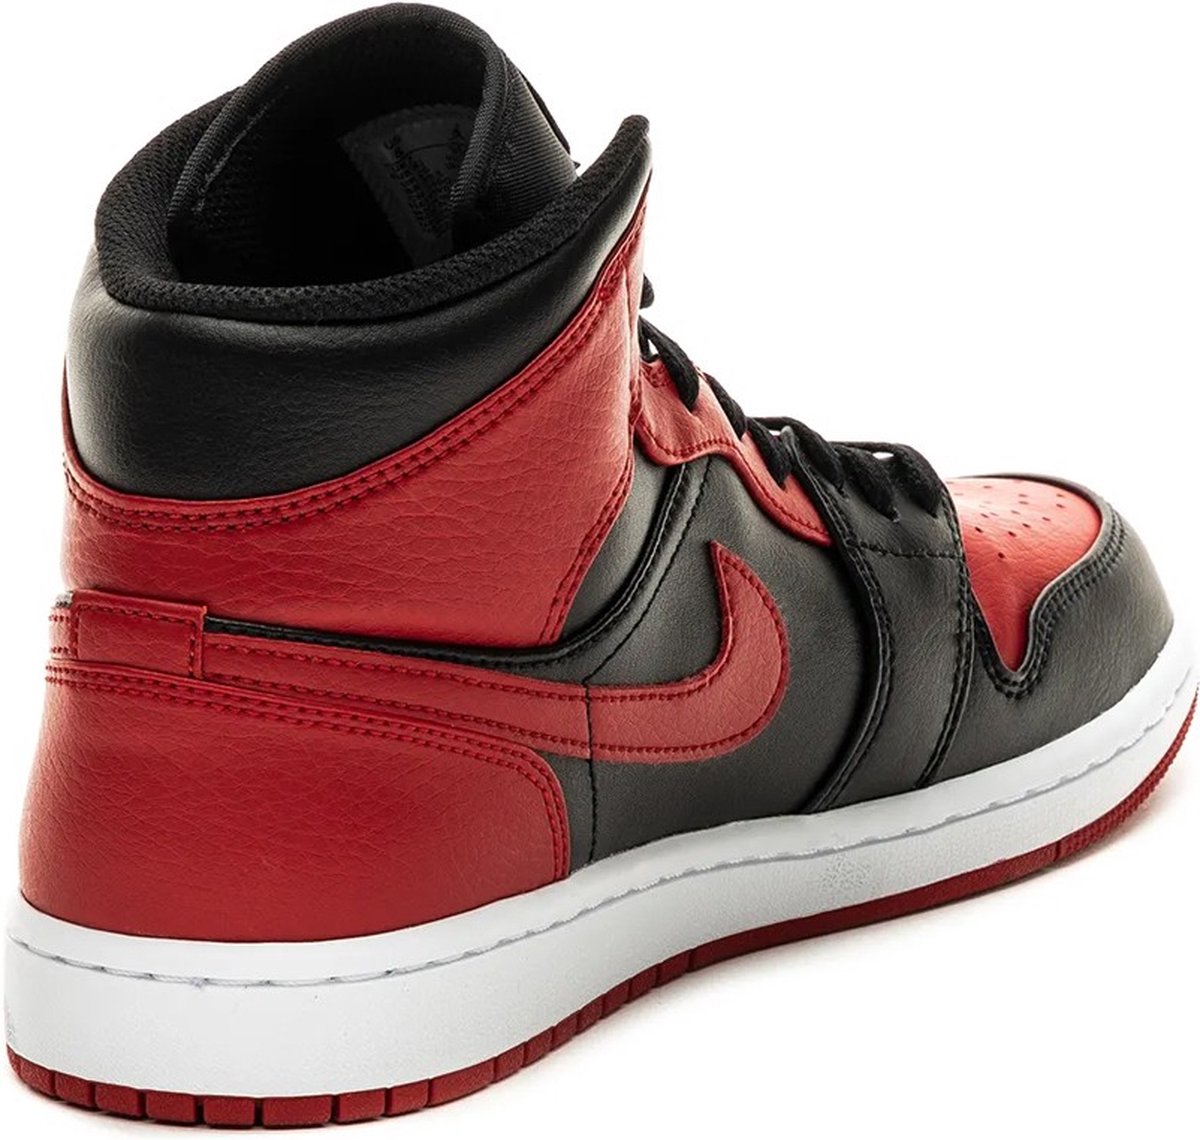 Nike Air Jordan 1 Mid, Noir/Gym Rouge White Banned, 554724 074, EUR 42.5 |  bol.com